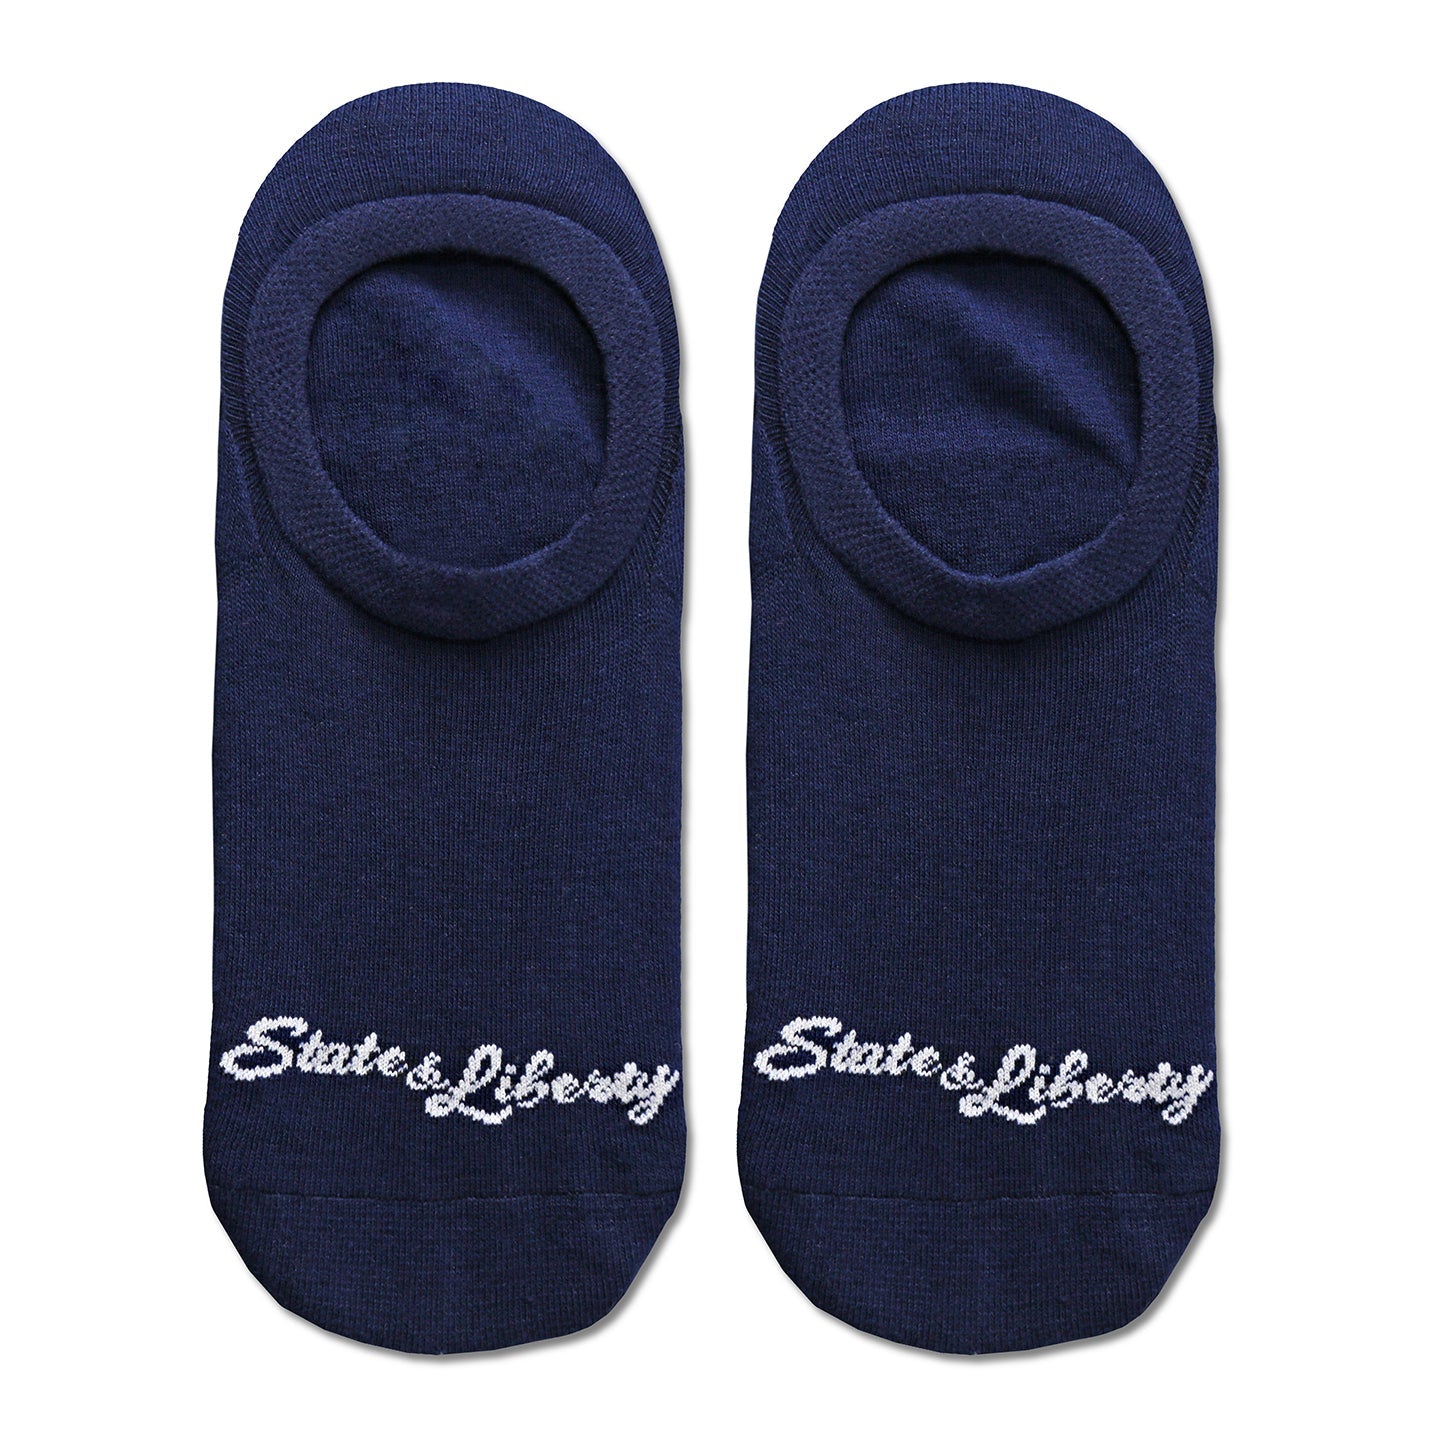 Navy blue cotton no-show socks, Accessories